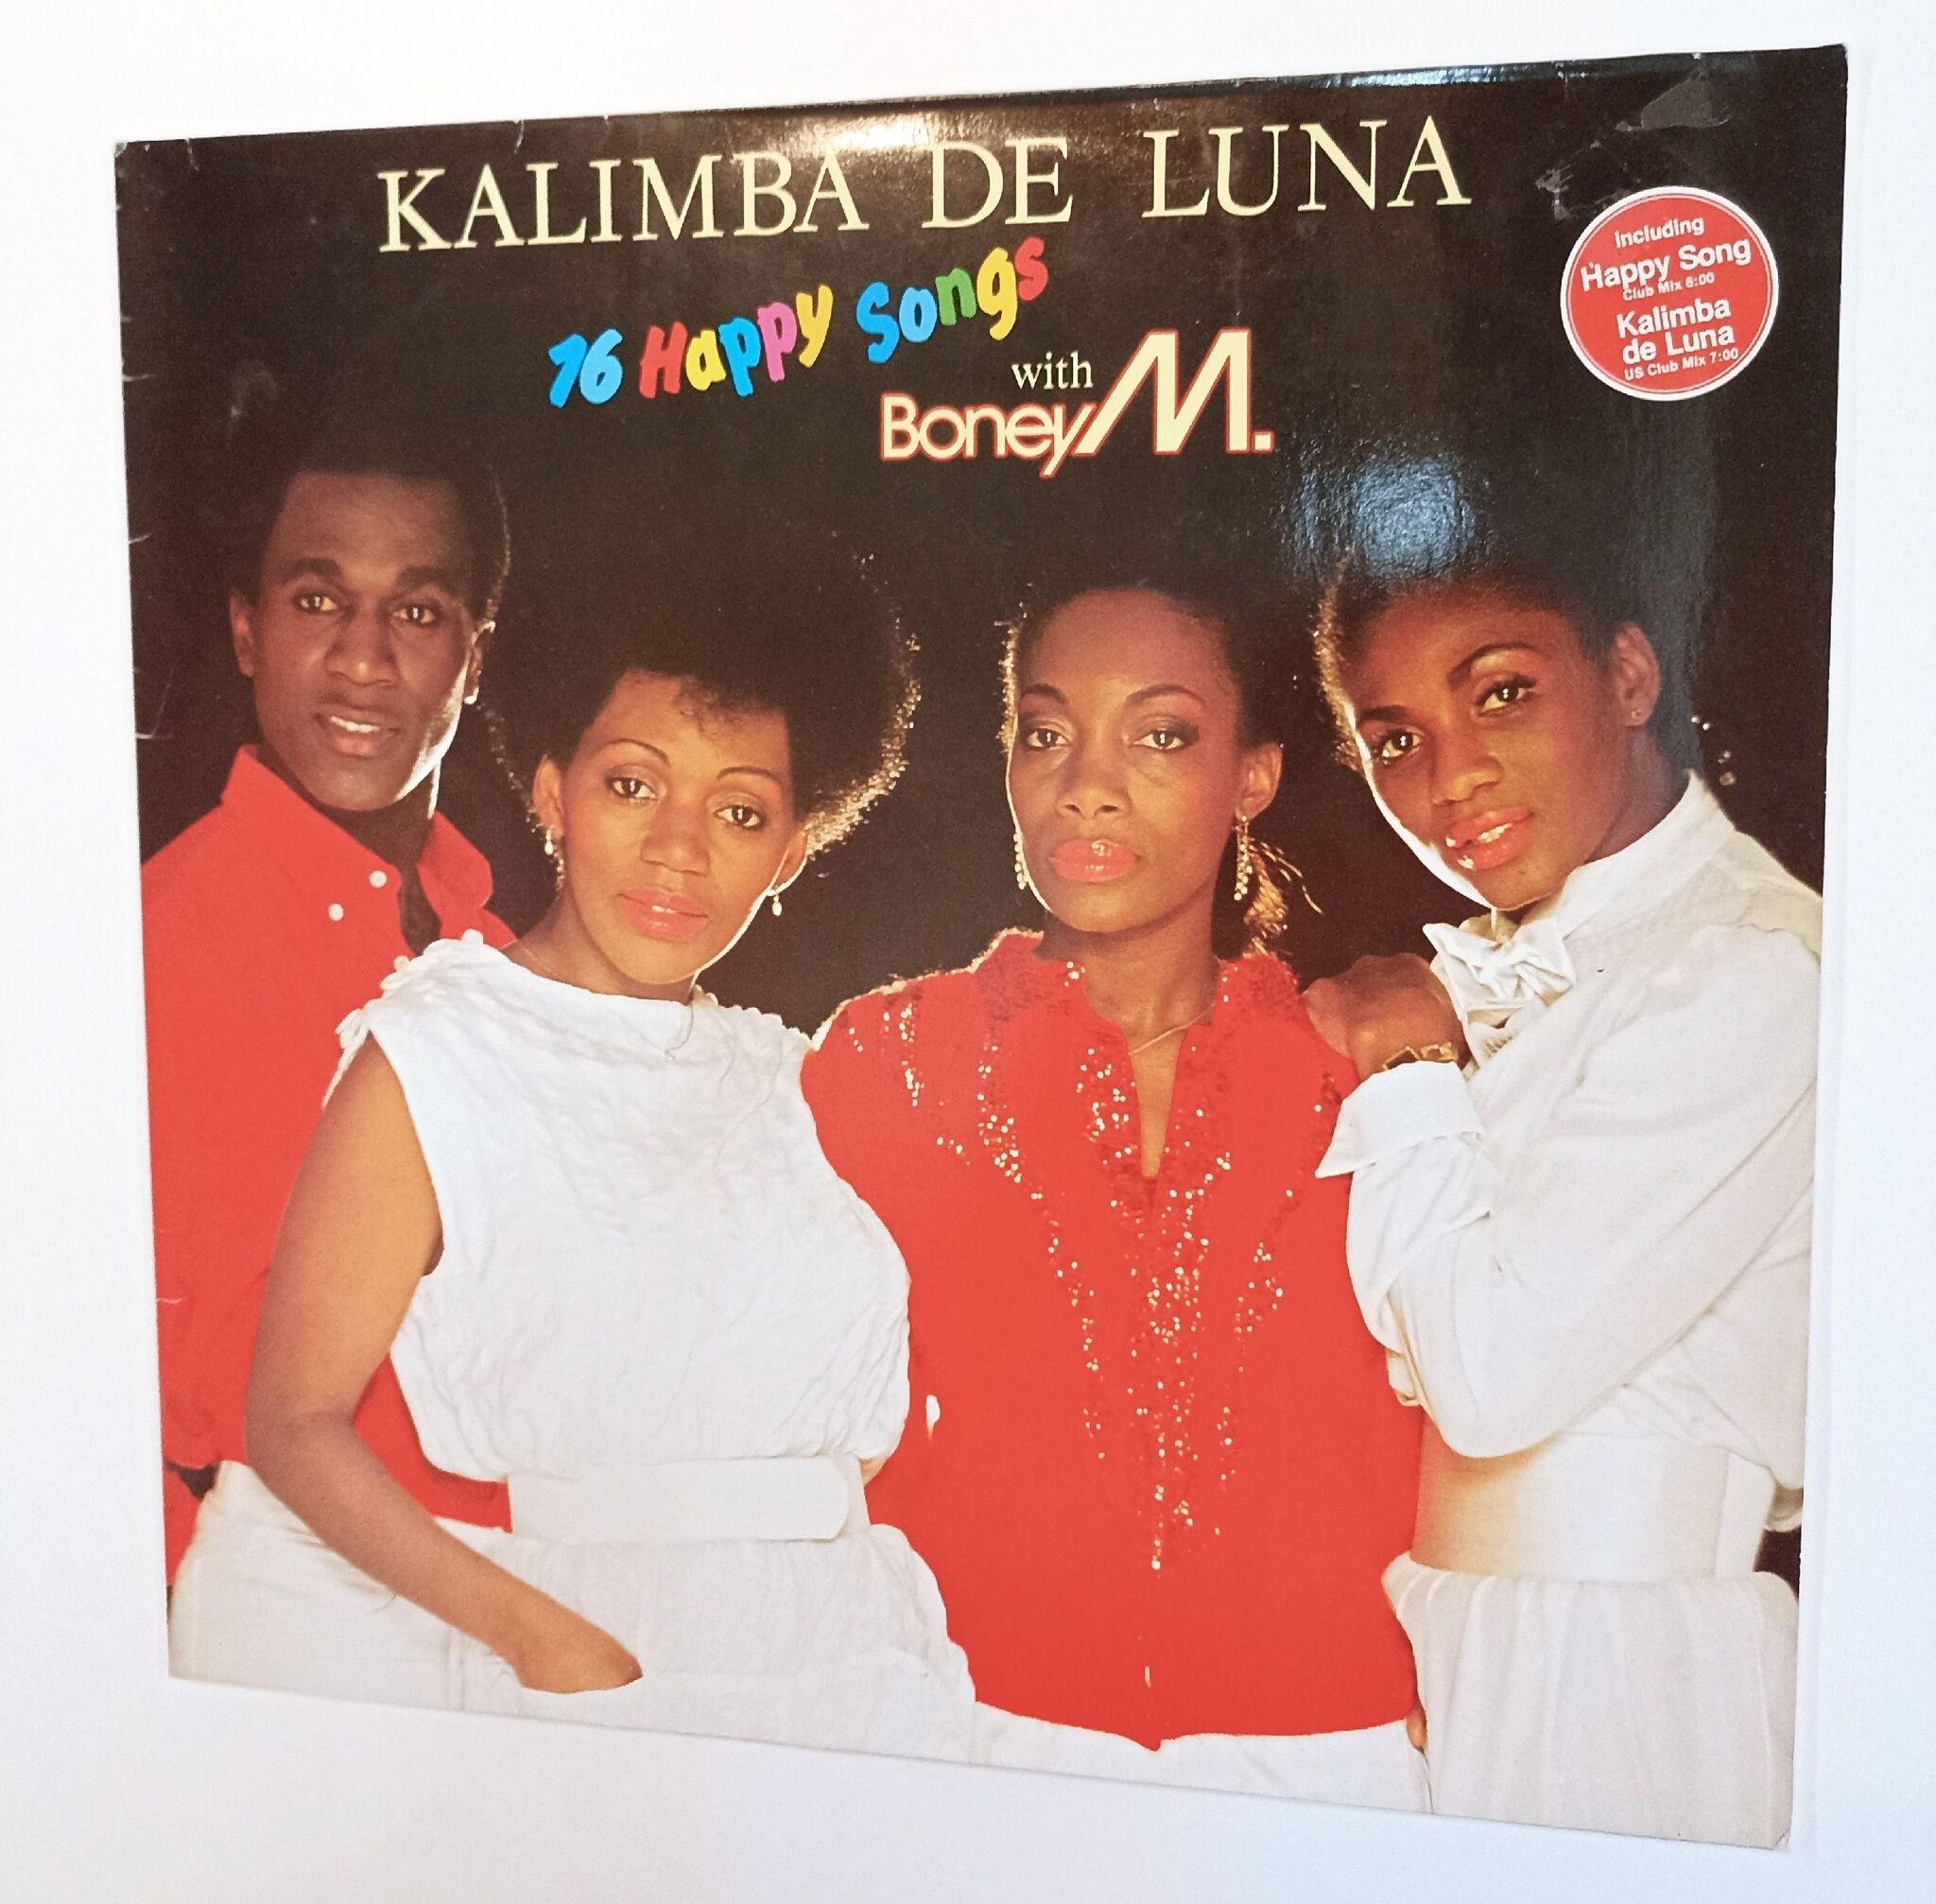 Boney m "Kalimba de Luna". Kalimba de Luna – 16 Happy Songs Boney m.. Kalimba de Luna – 16 Happy Songs Boney m. сони Рекордс. Boney m Kalimba de Luna фото. Boney m kalimba